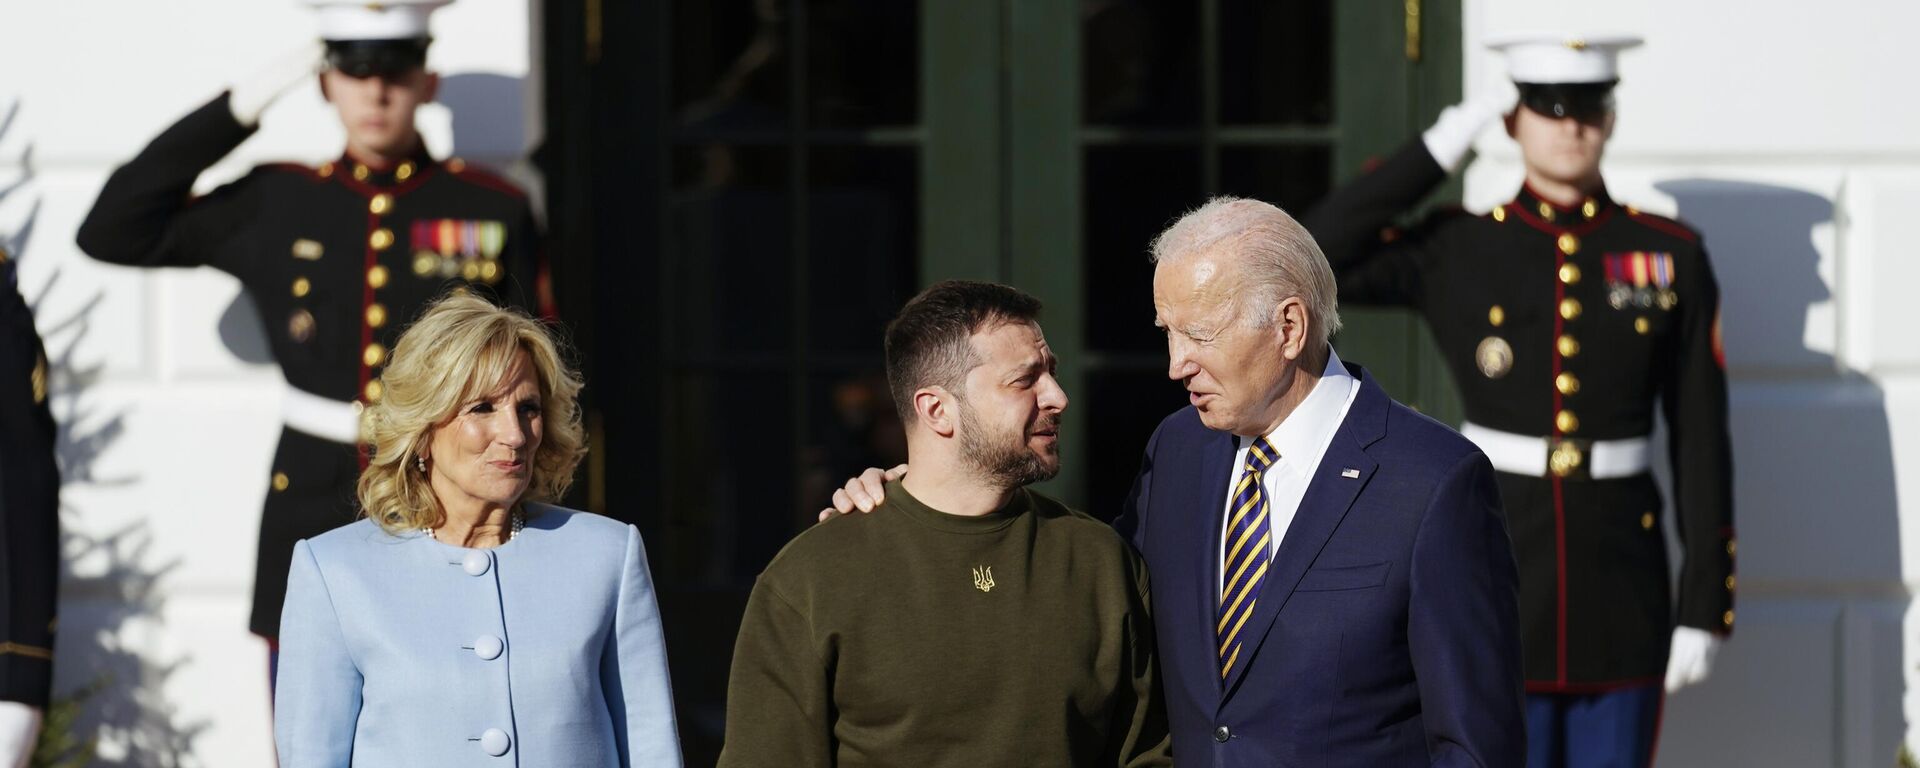 Volodímir Zelenski, presidente de Ucrania, y Joe Biden, presidente de EEUU, acompañado de su esposa, Jill Biden. - Sputnik Mundo, 1920, 01.02.2023